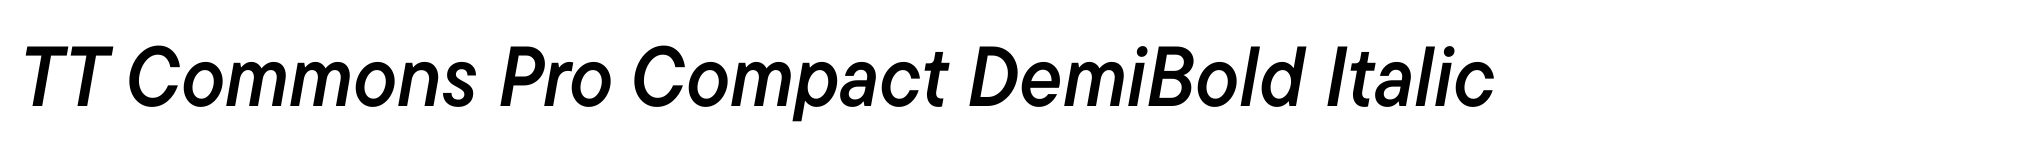 TT Commons Pro Compact DemiBold Italic image